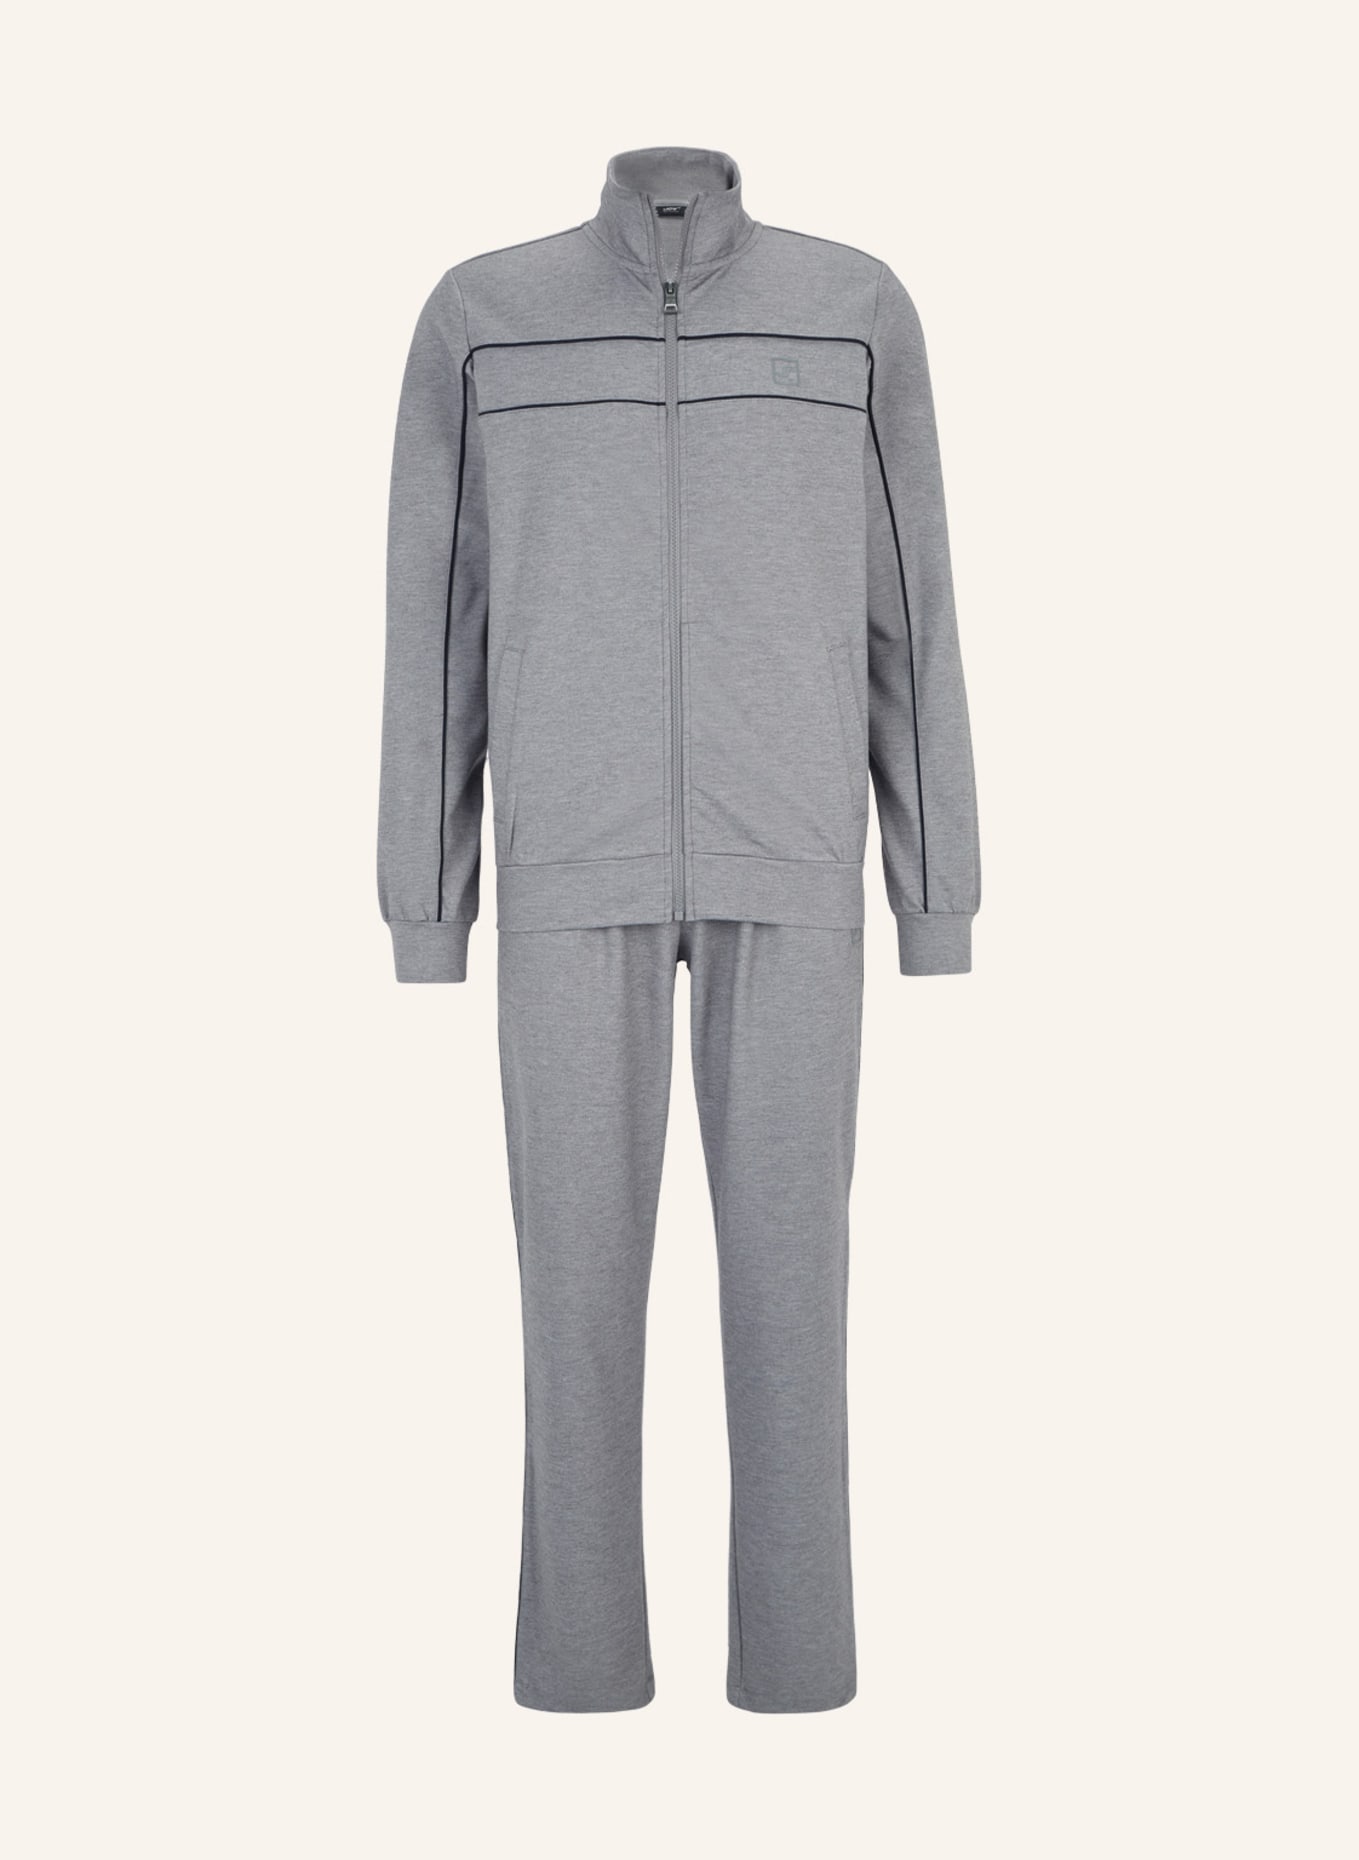 JOY sportswear Anzug COLLIN, Farbe: GRAU (Bild 1)